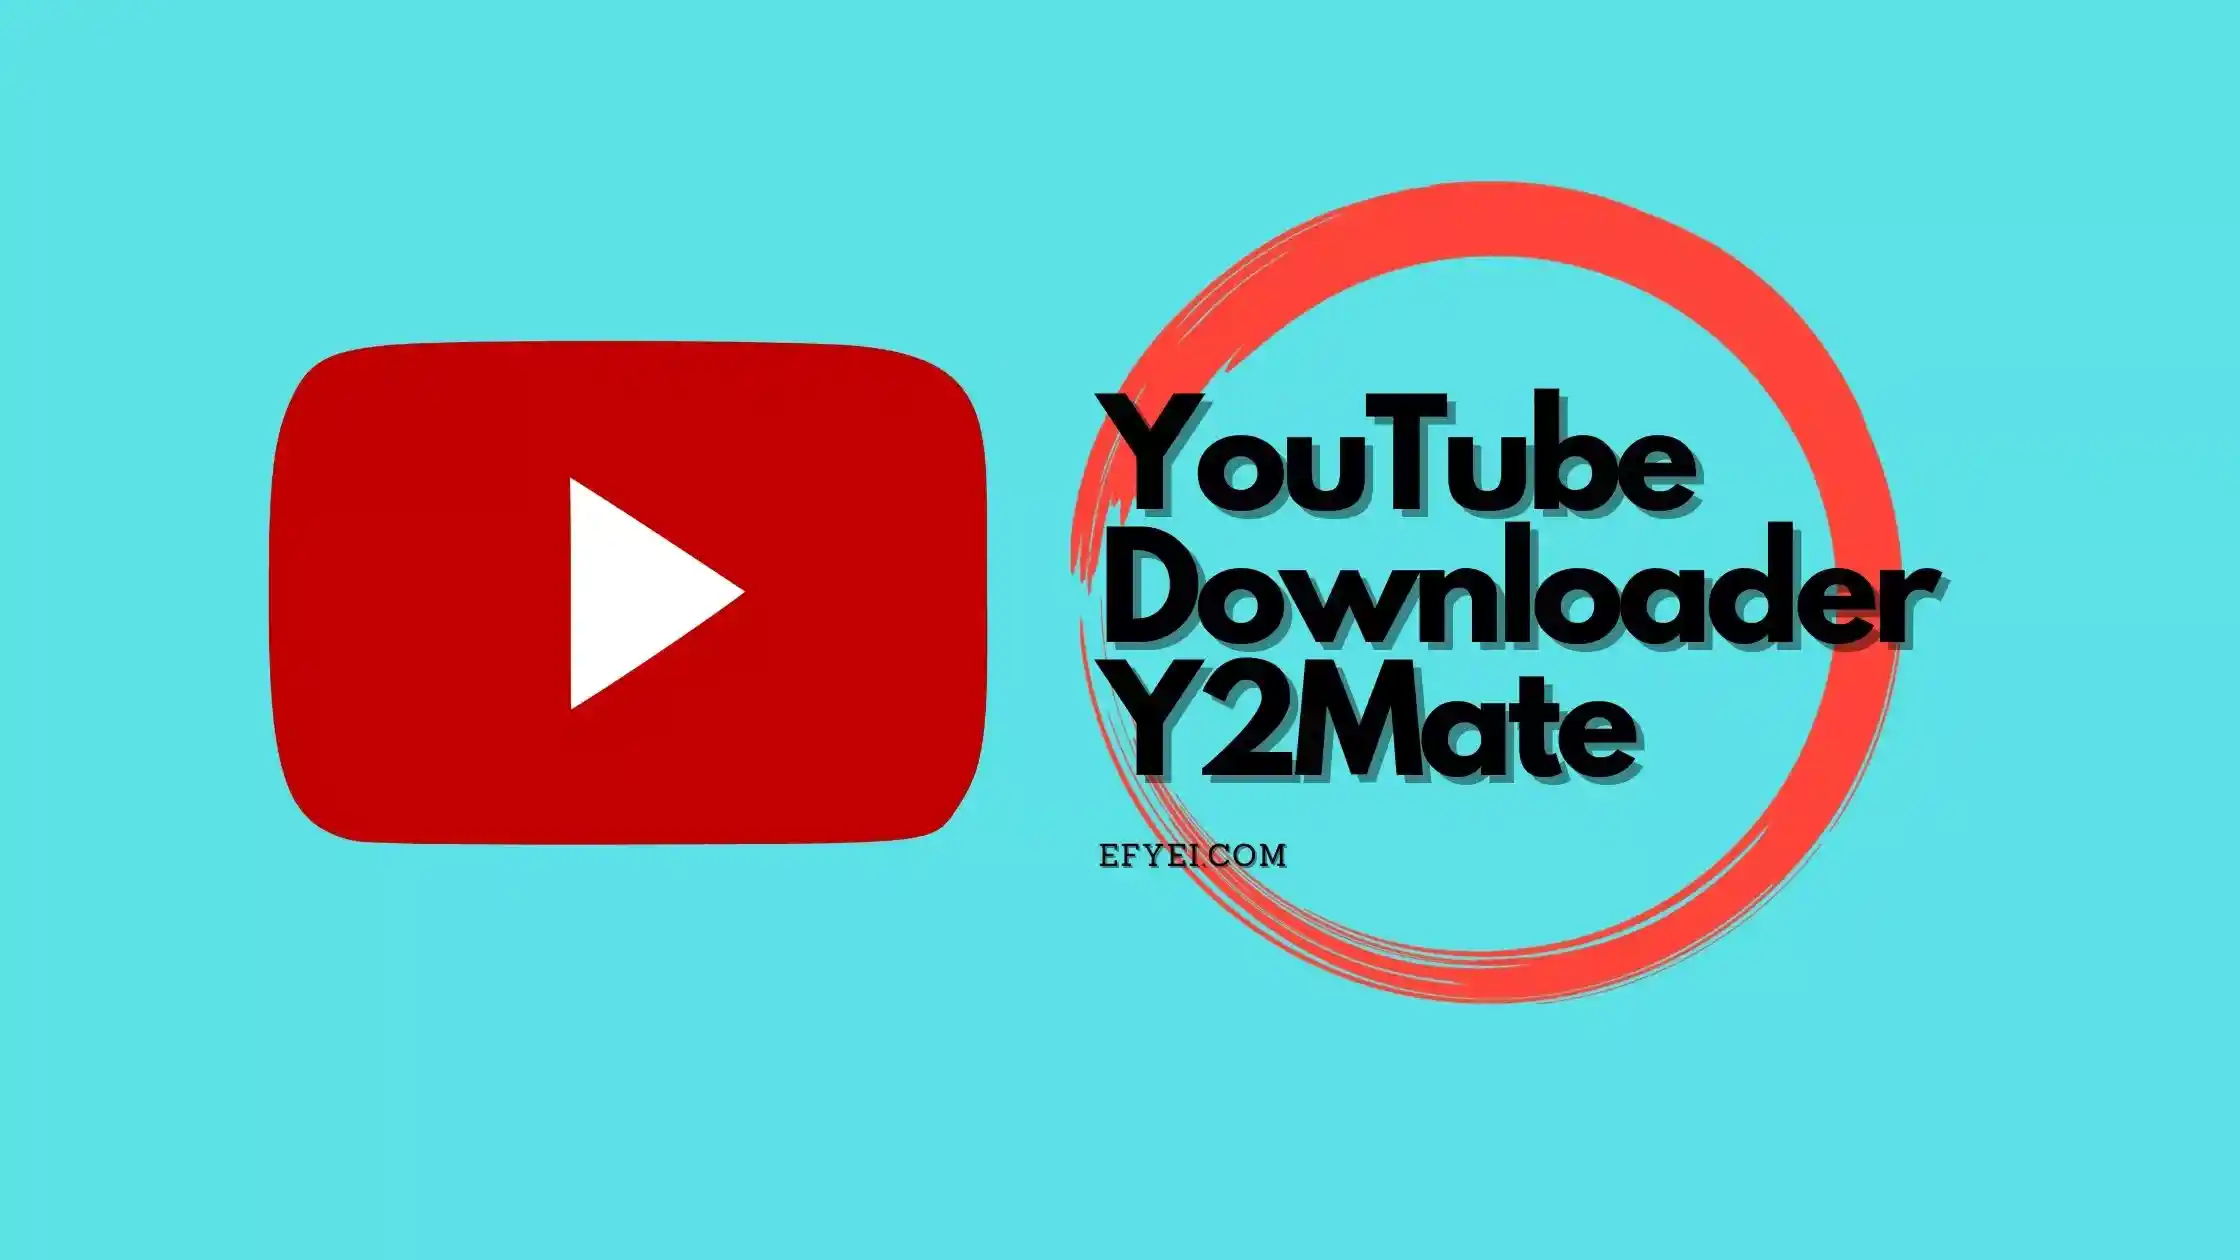 Youtube downloader Y2Mate